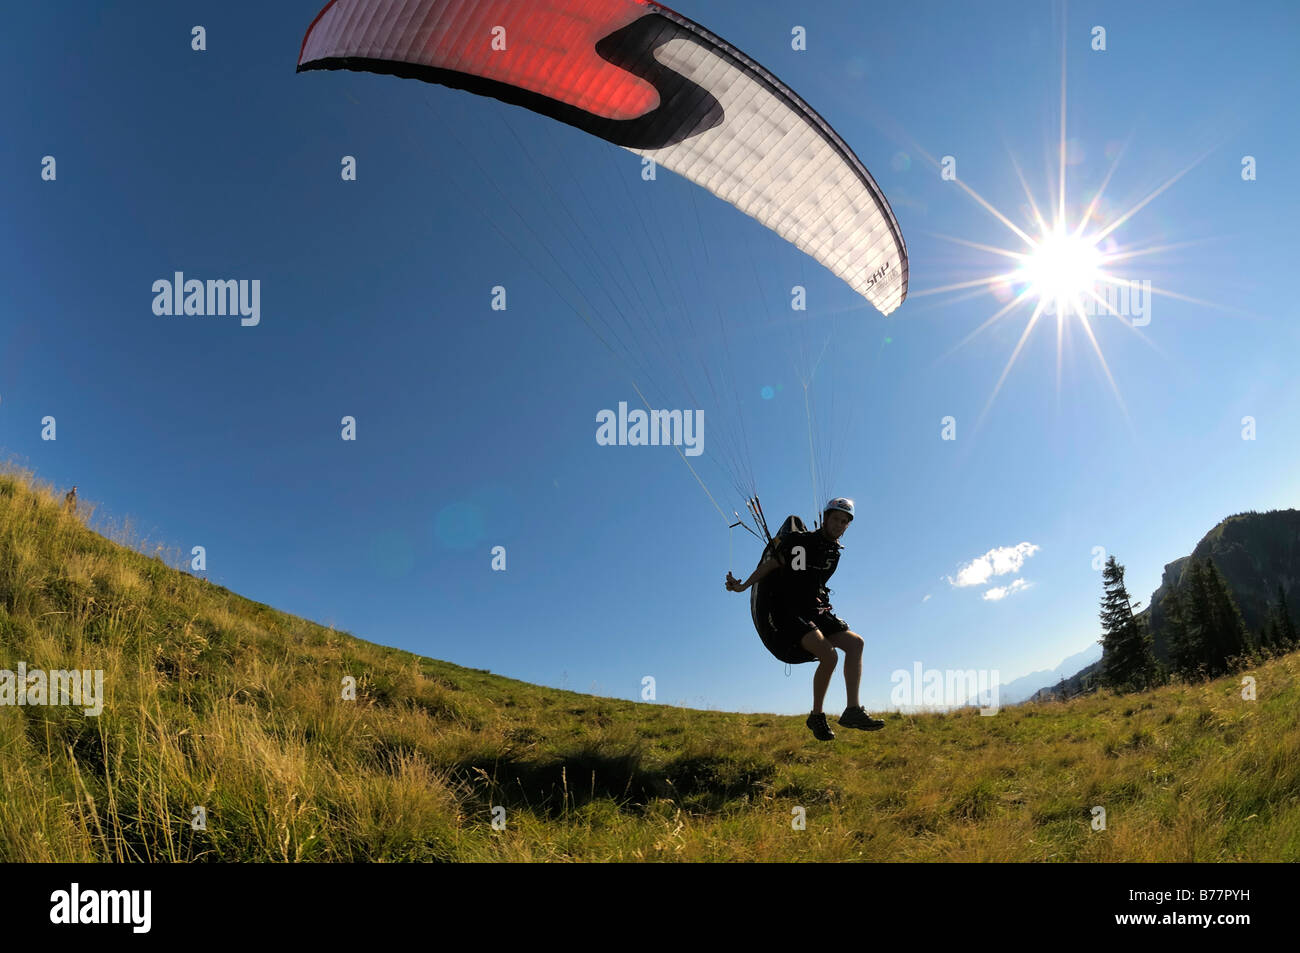 Paraglider taking off, backlit, wide-angle shot, Brauneck, Upper Bavaria, Germany, Europe Stock Photo